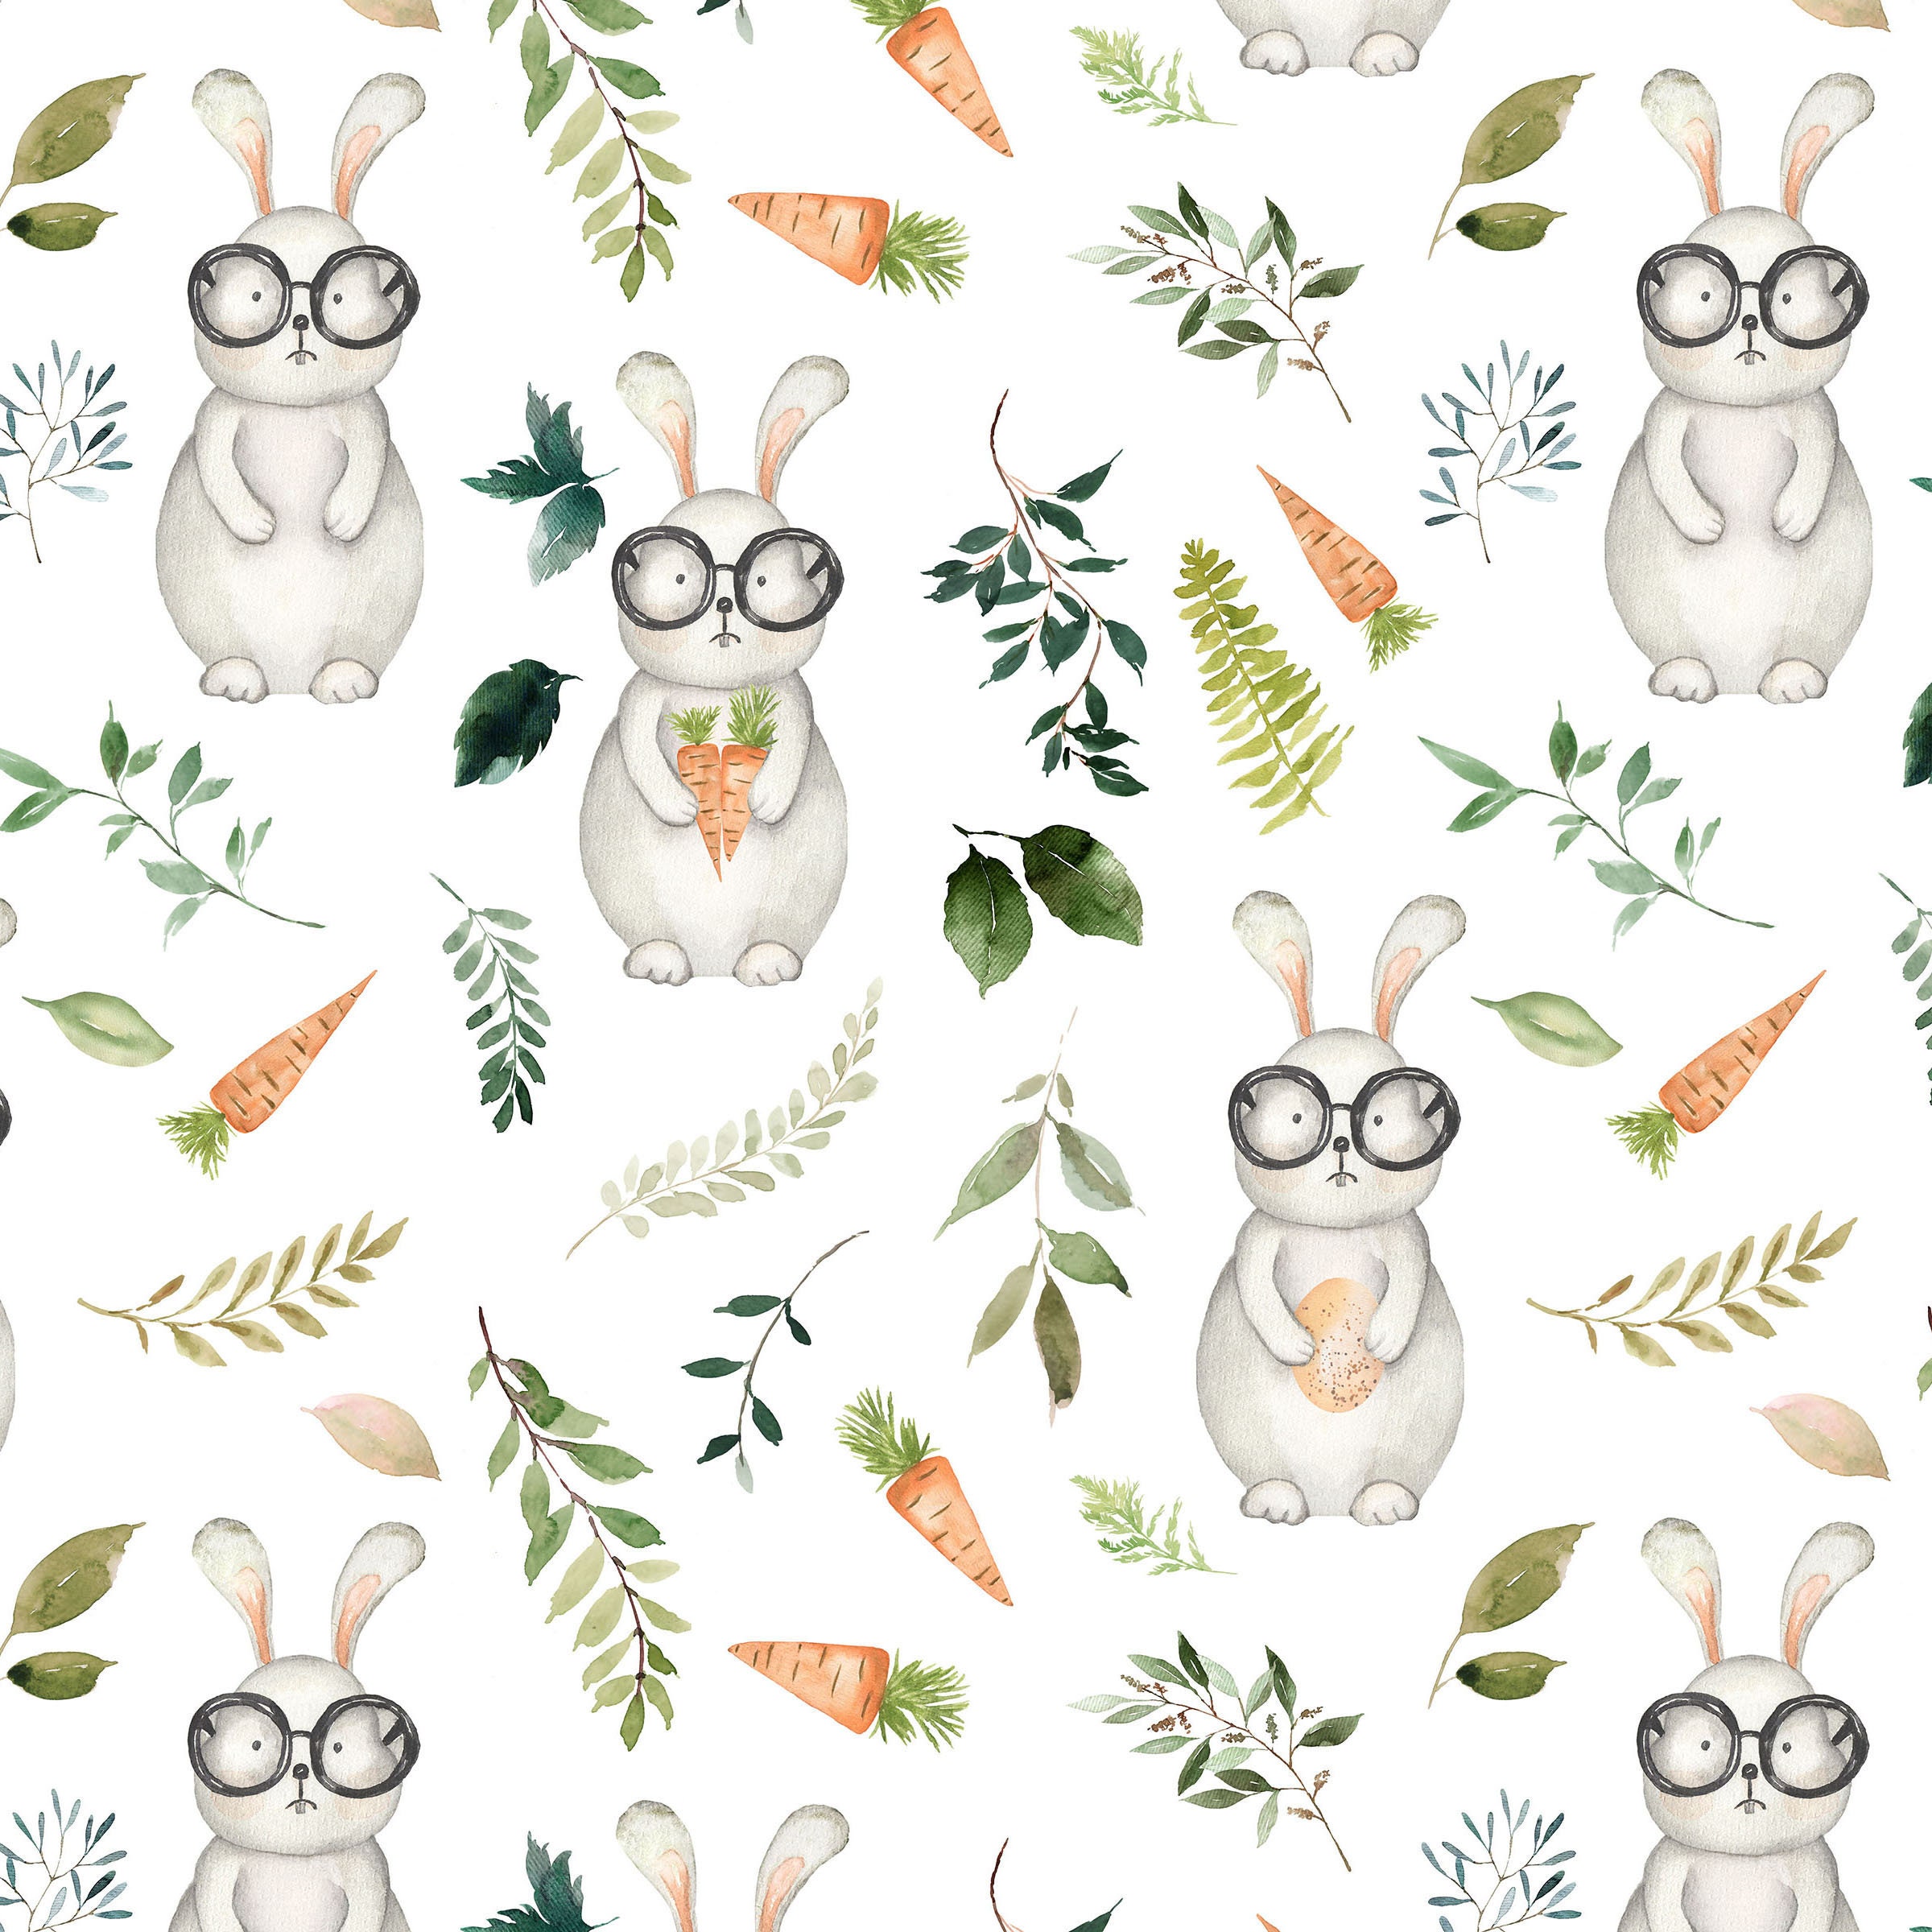 Garden Bunnies 10473-04 Benartex Bunny Fabric Green Fabric Rabbit Fabric Fabric By The Yard A Wooly Garden Quilting Cotton